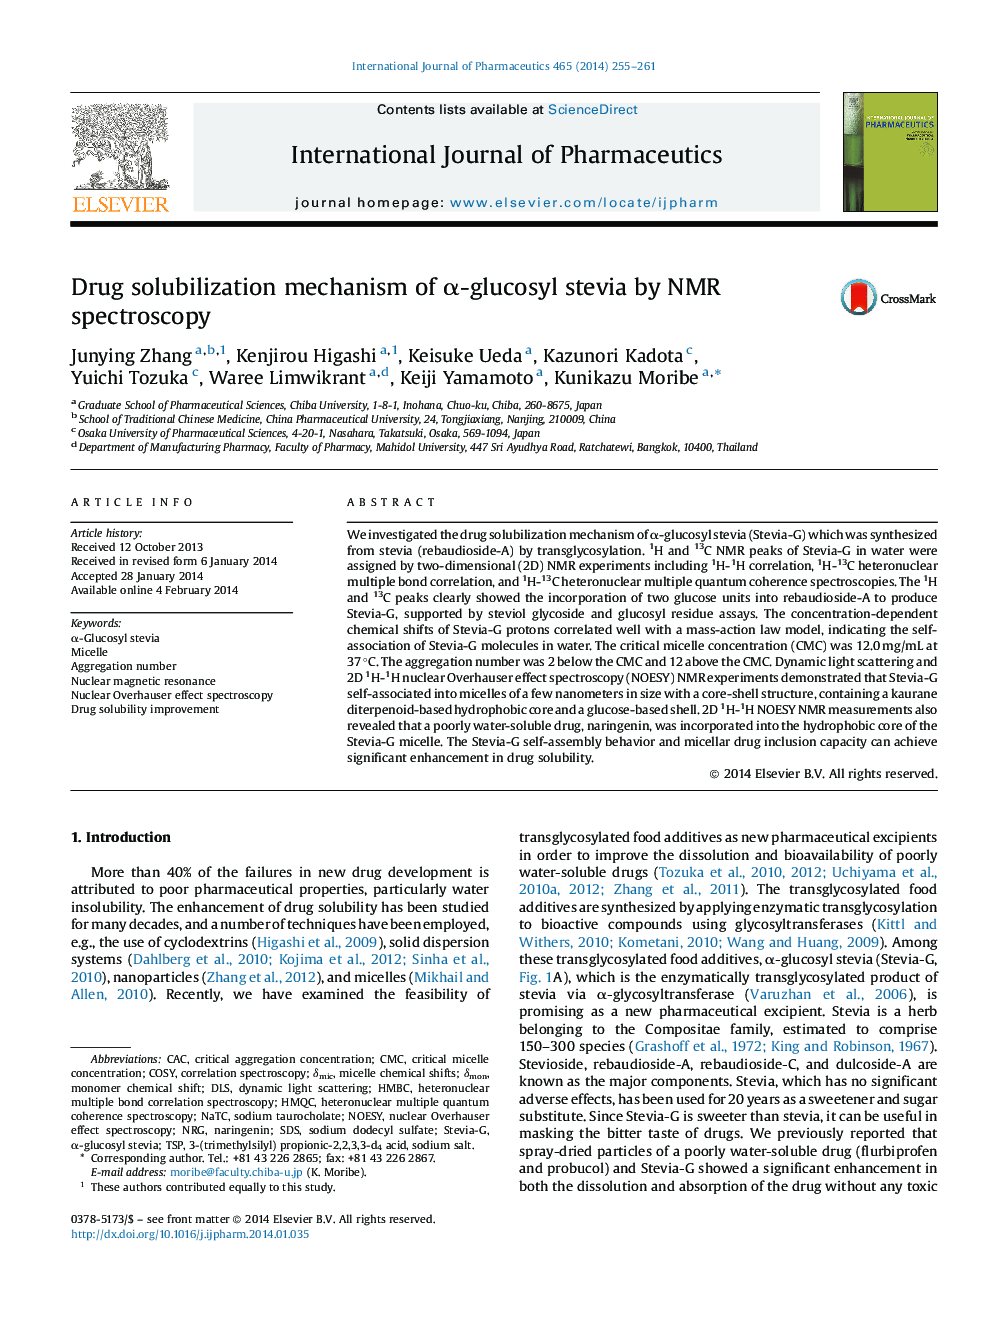 Drug solubilization mechanism of Î±-glucosyl stevia by NMR spectroscopy